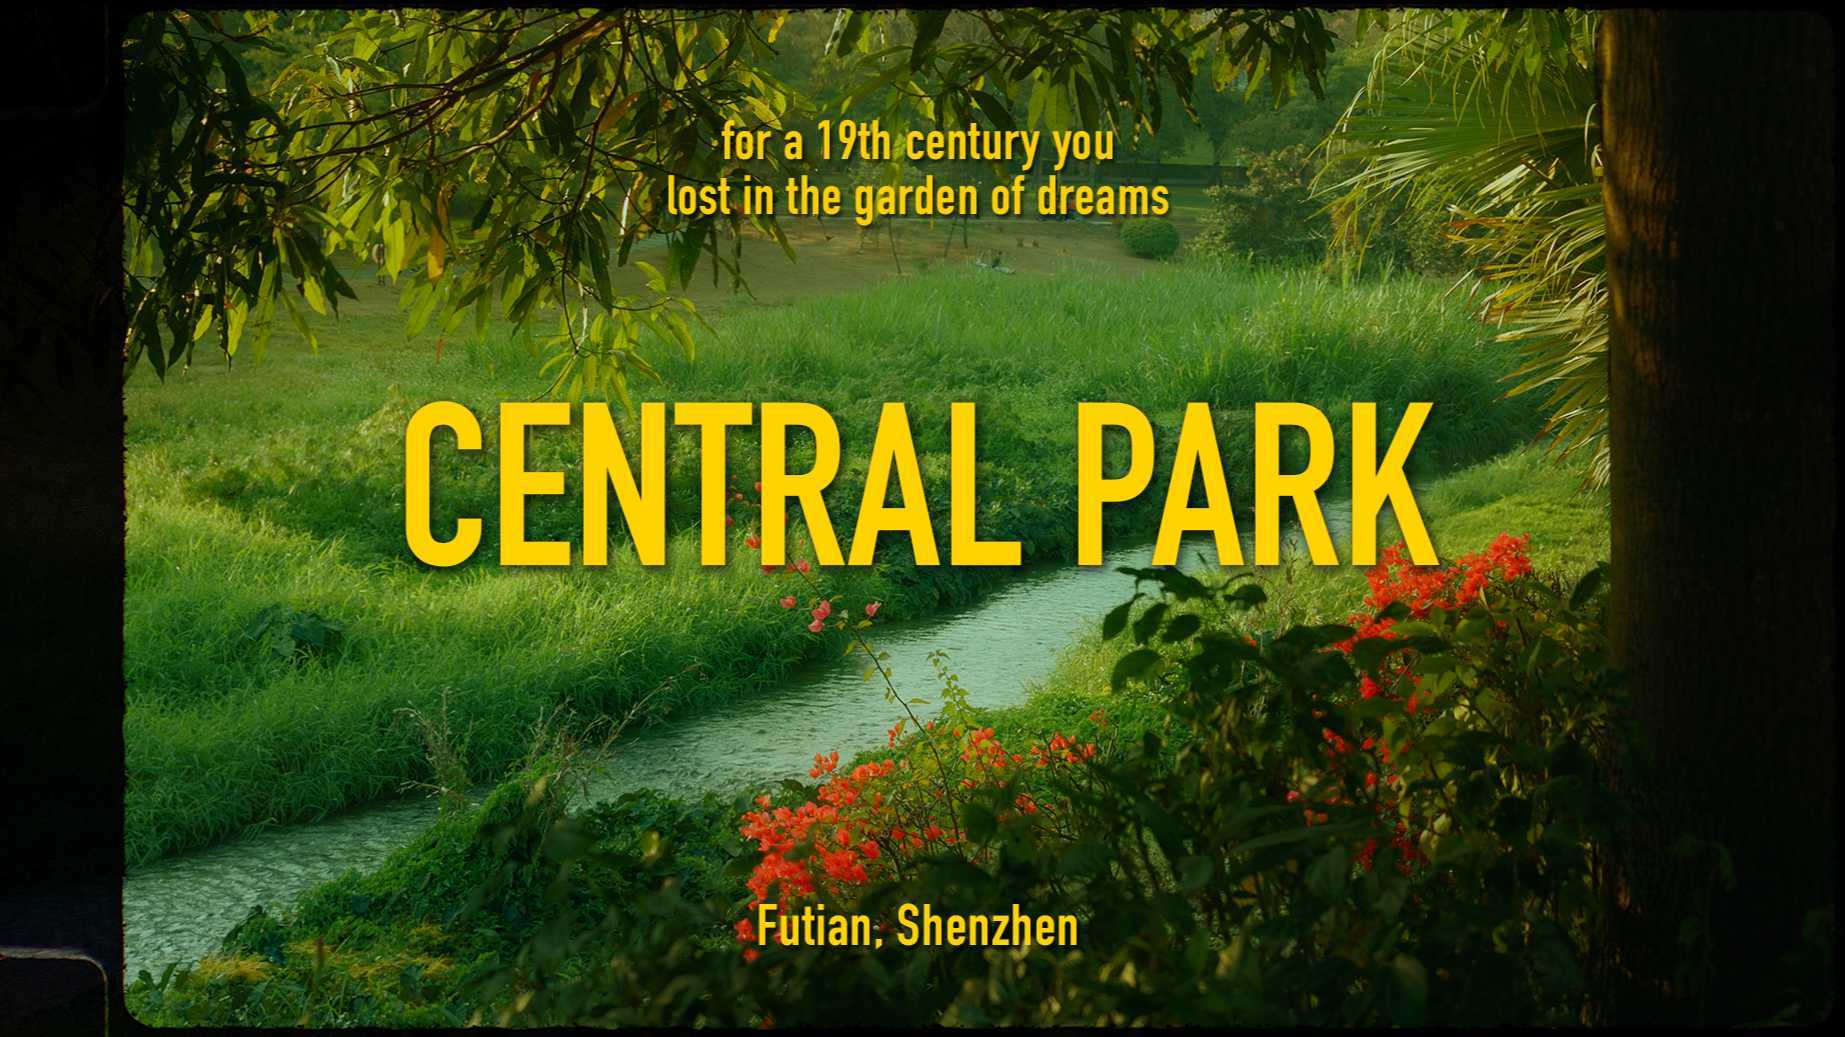 Central Park / 深圳中心公园的南法假日 电影感文艺短片 (4K)